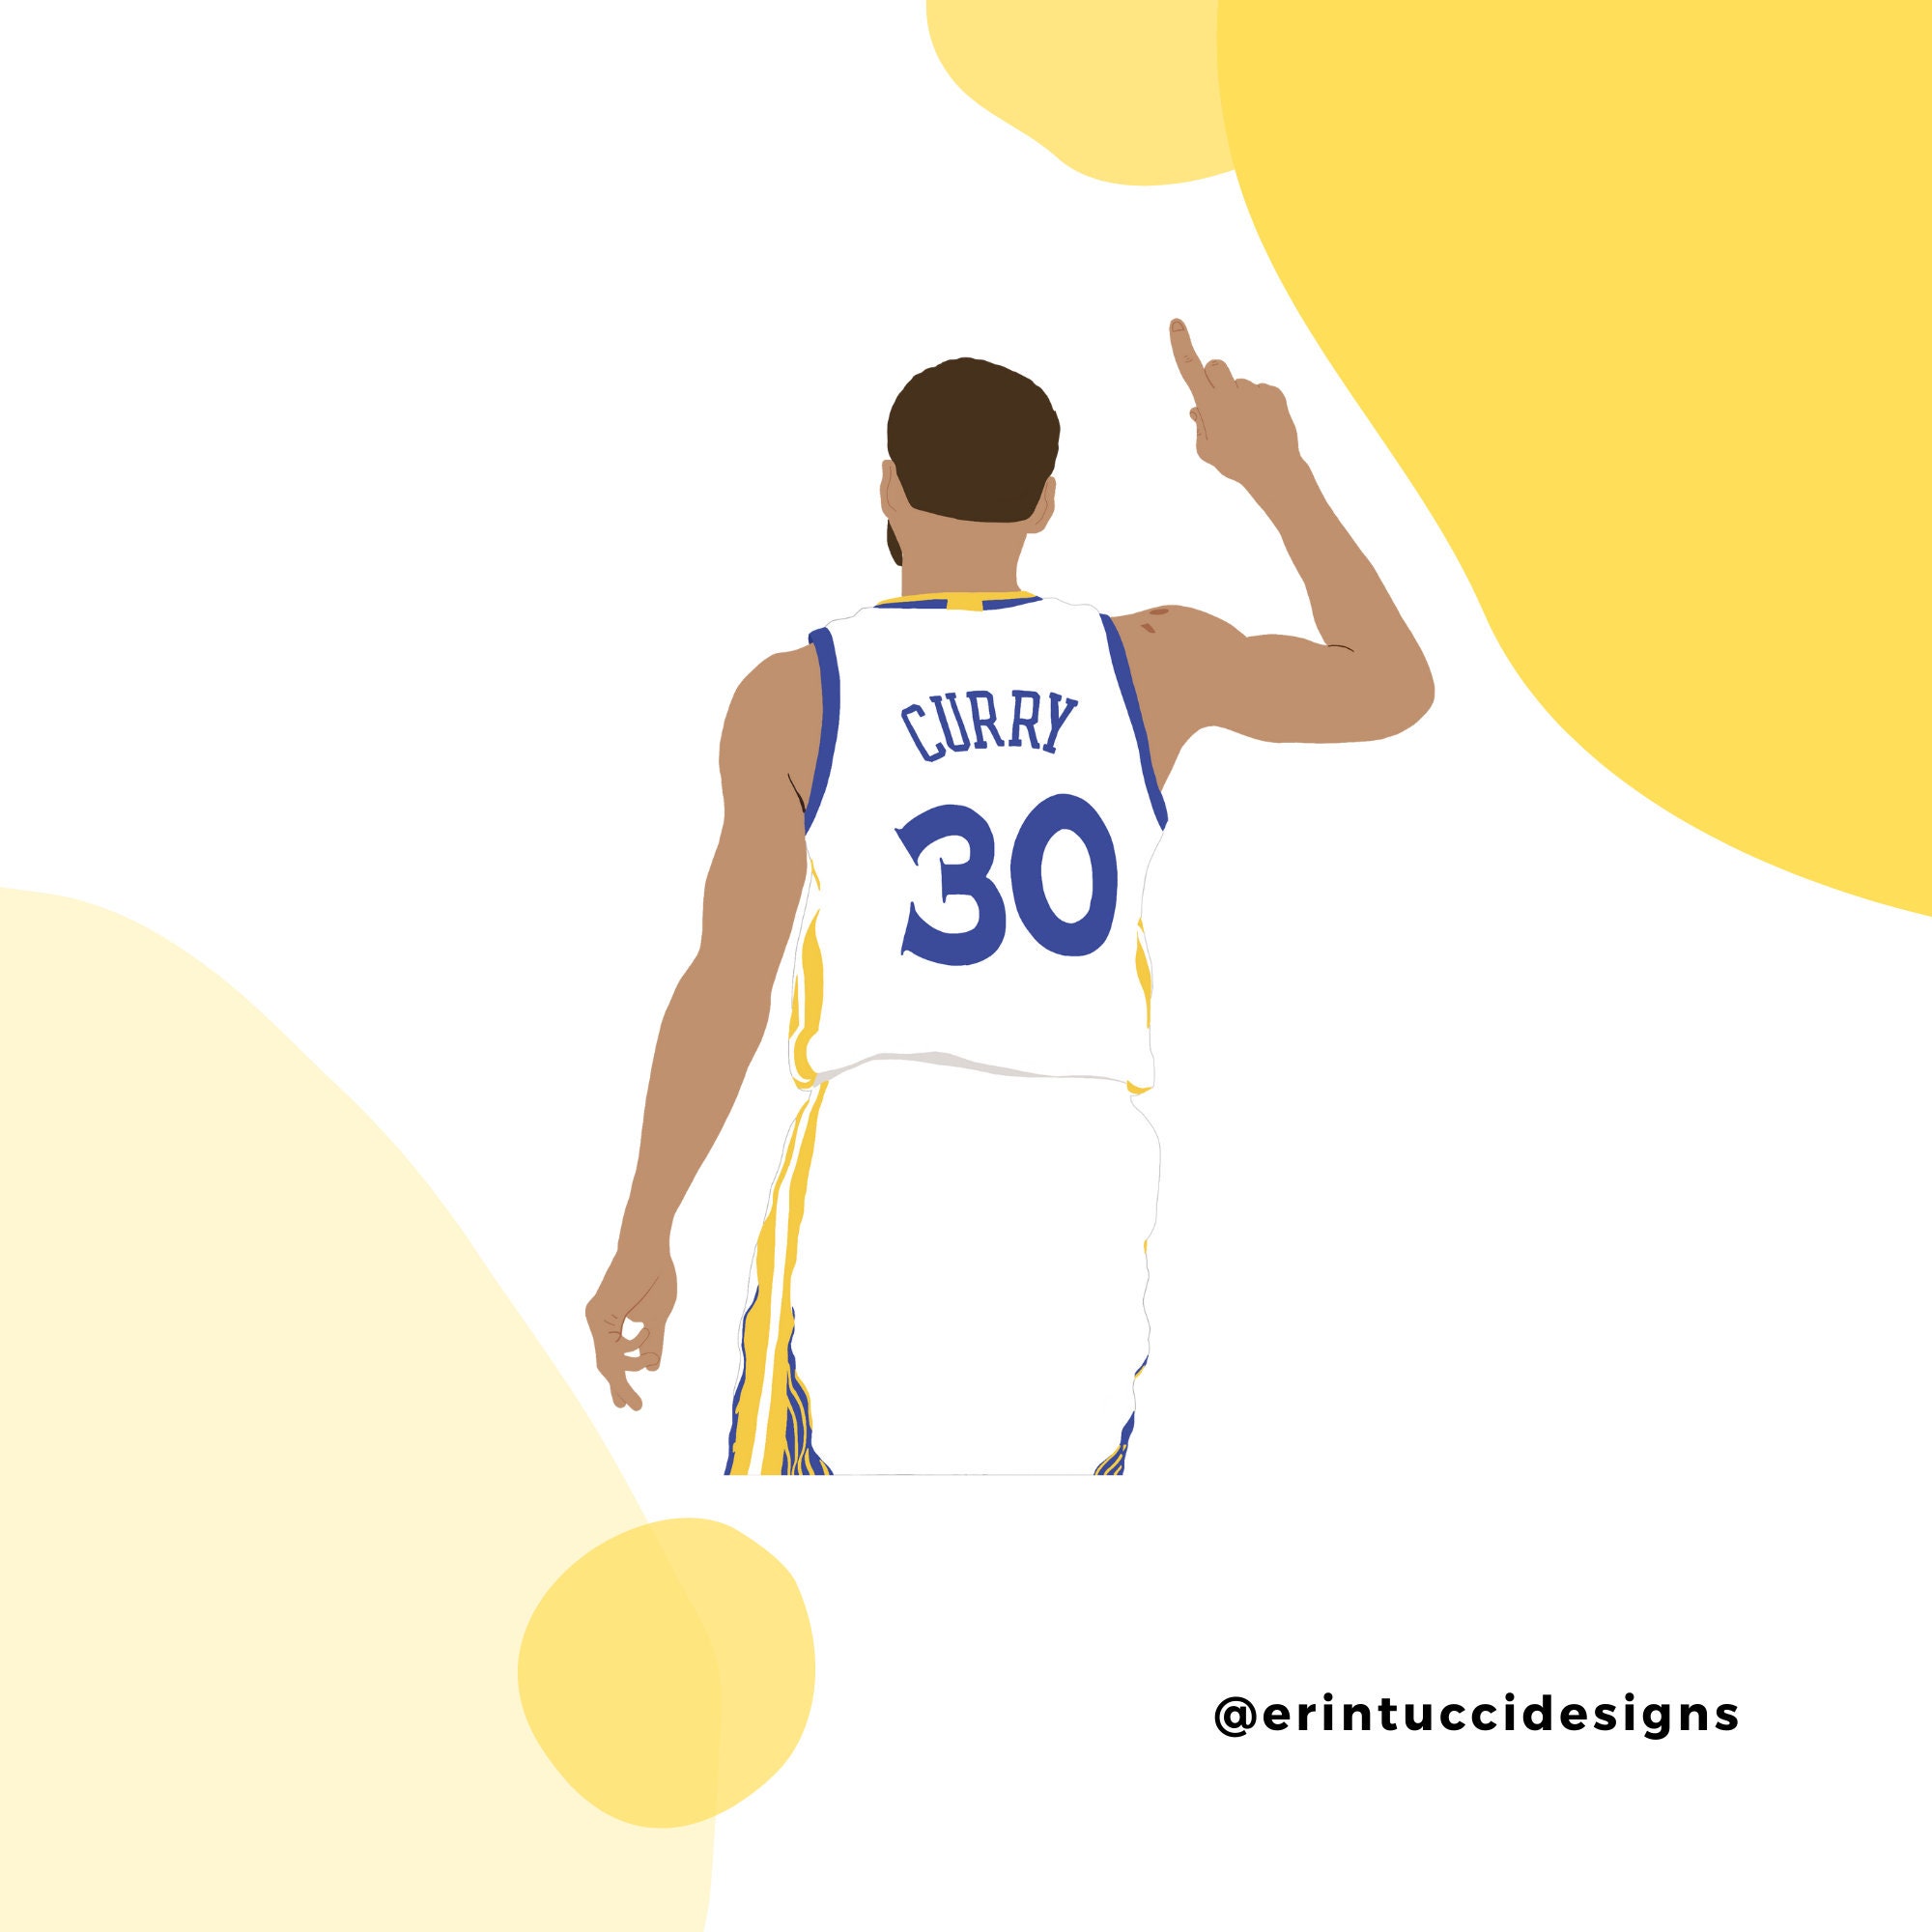 Nba Golden State Warriors Stephen Curry #30 Basketball Jersey(adult Size)